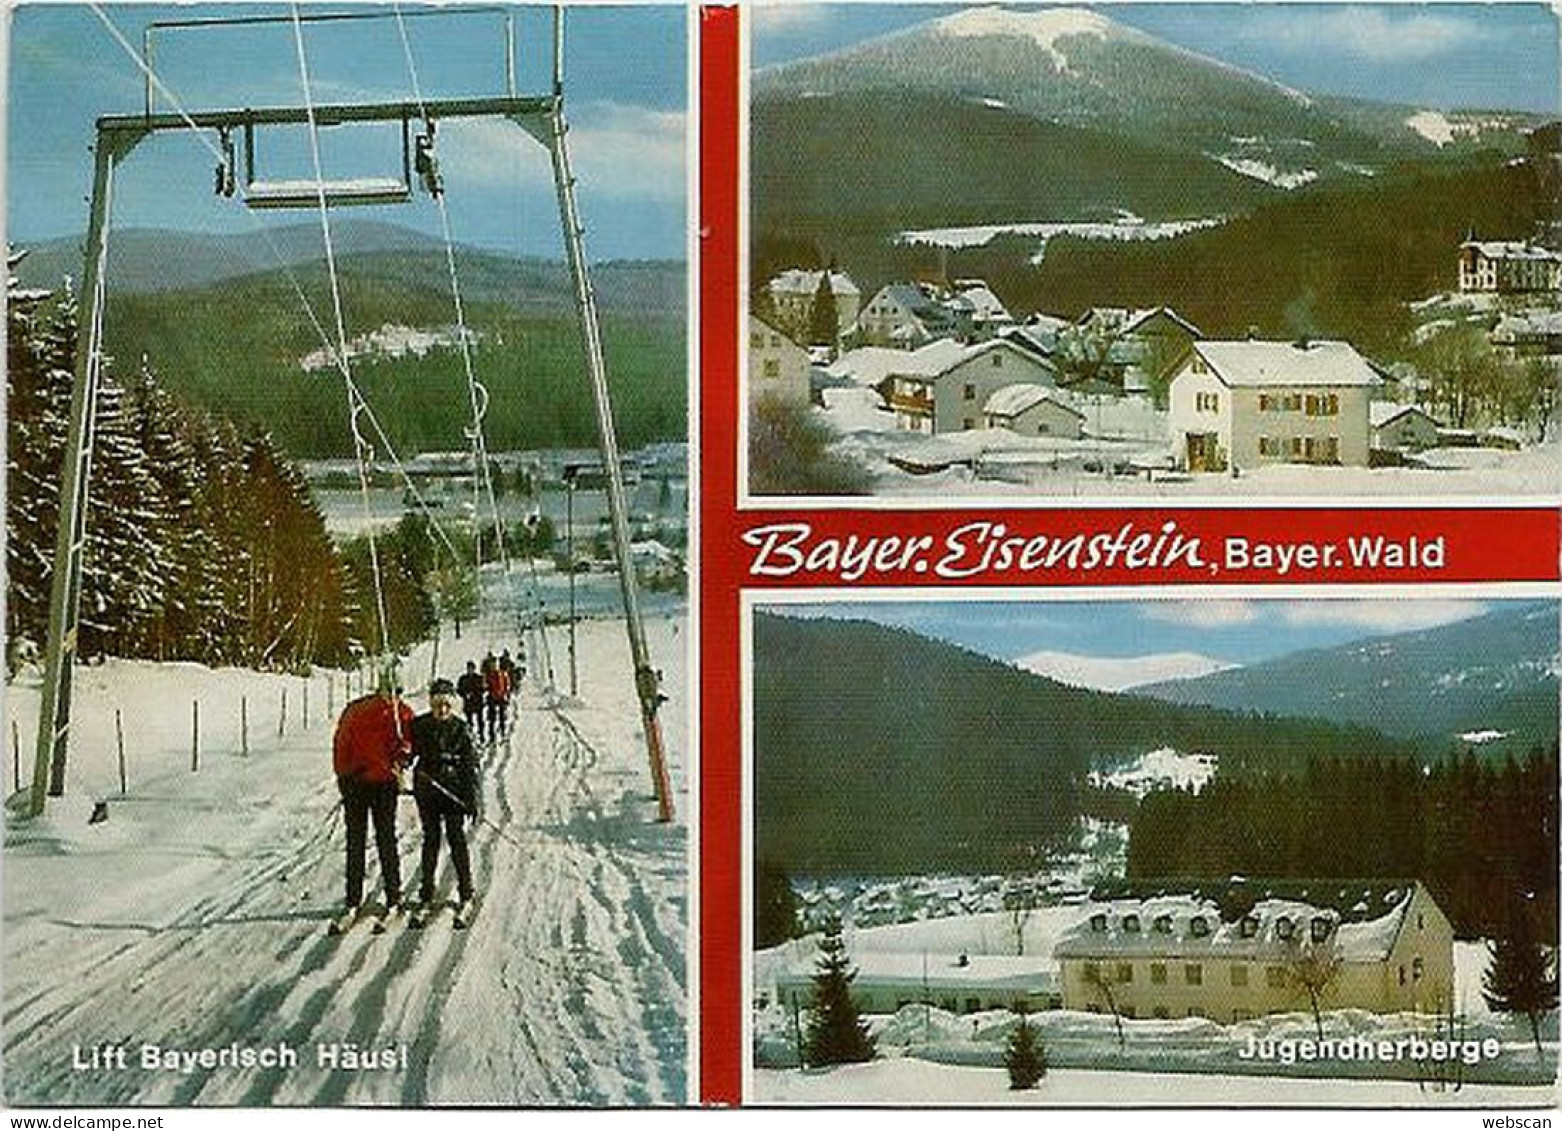 6 AKs Bayerisch Eisenstein Versch. Motive 4x Mehrbild U.a. Arber + Skilift JuHe # - Regen